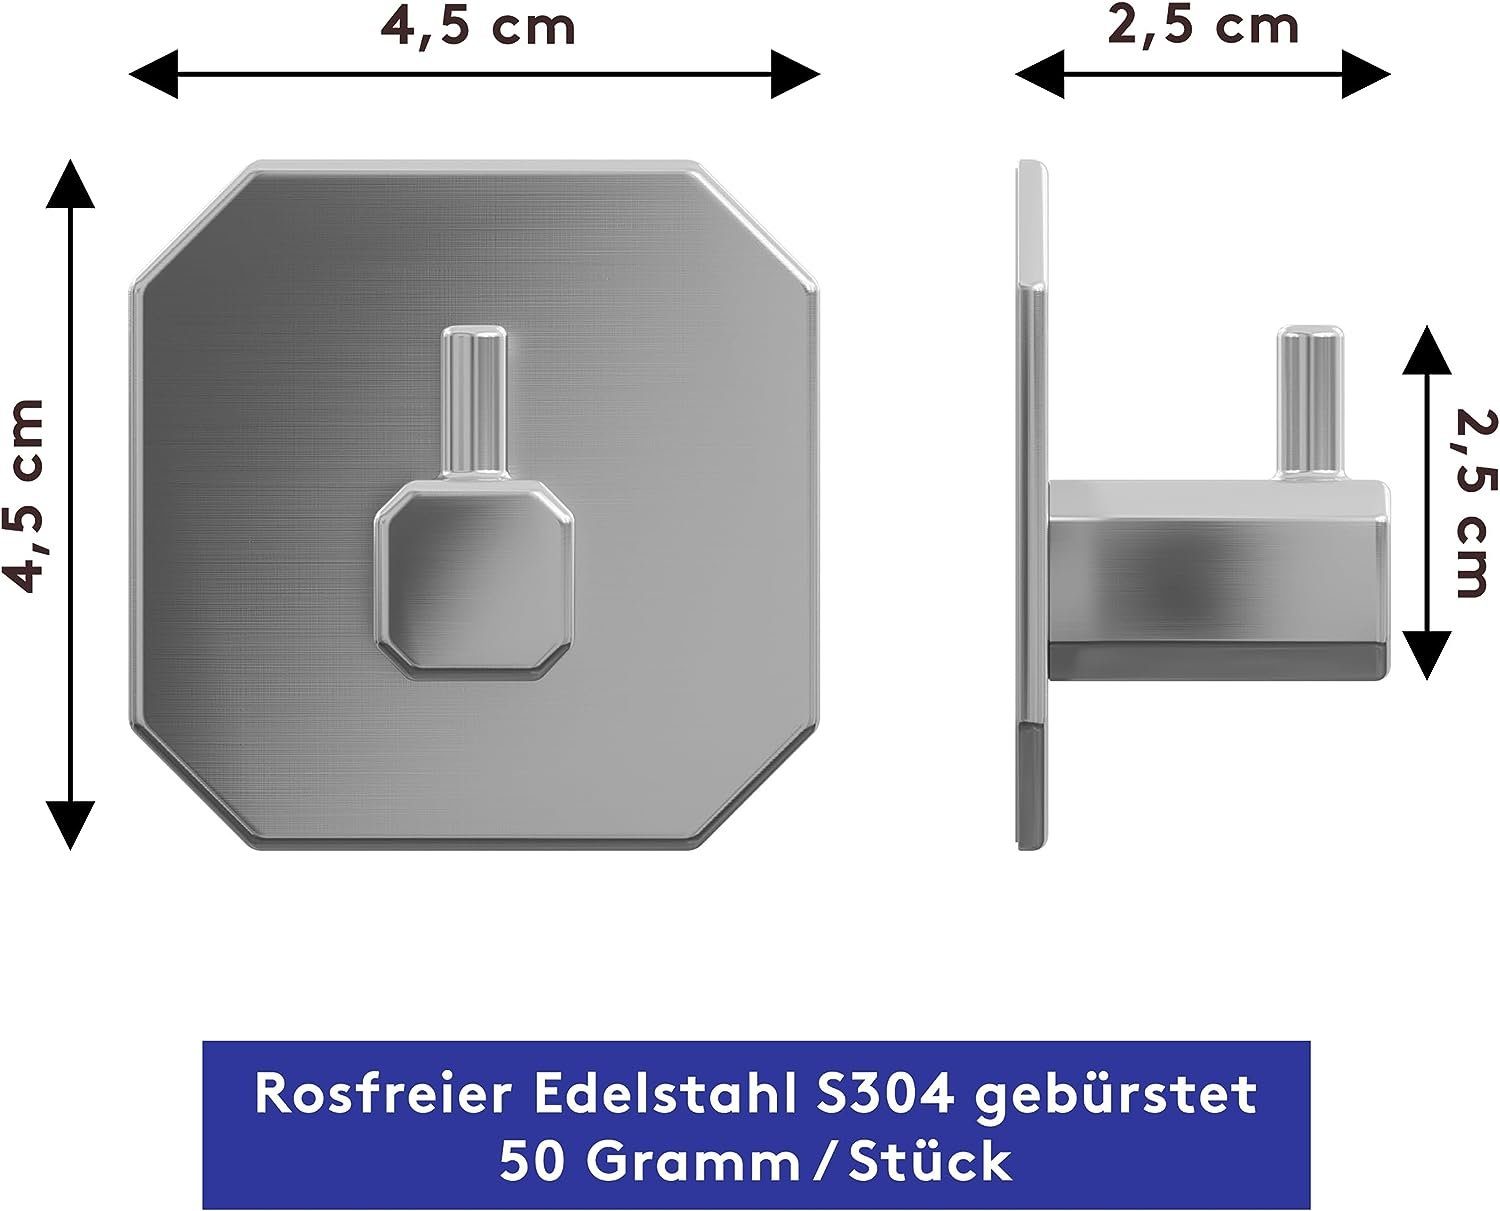 Doppel-Haken 'Elegaant' verchromt mit Klebelösung 5 x 8 x 4,3 cm